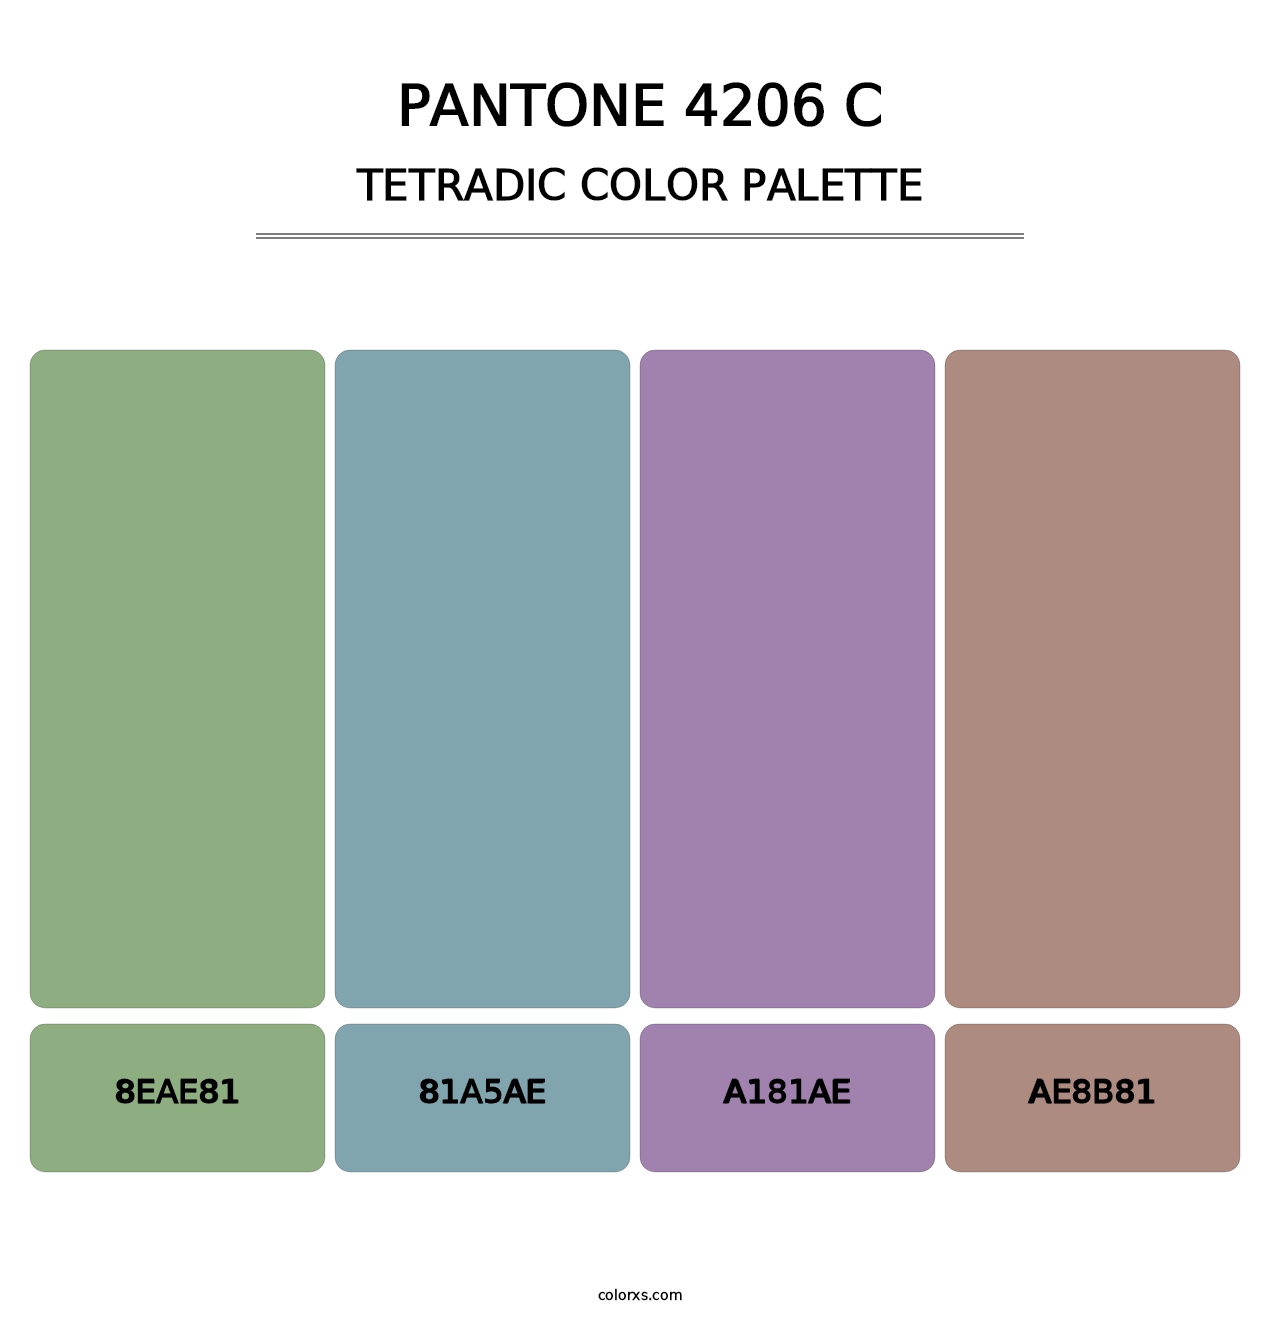 PANTONE 4206 C - Tetradic Color Palette